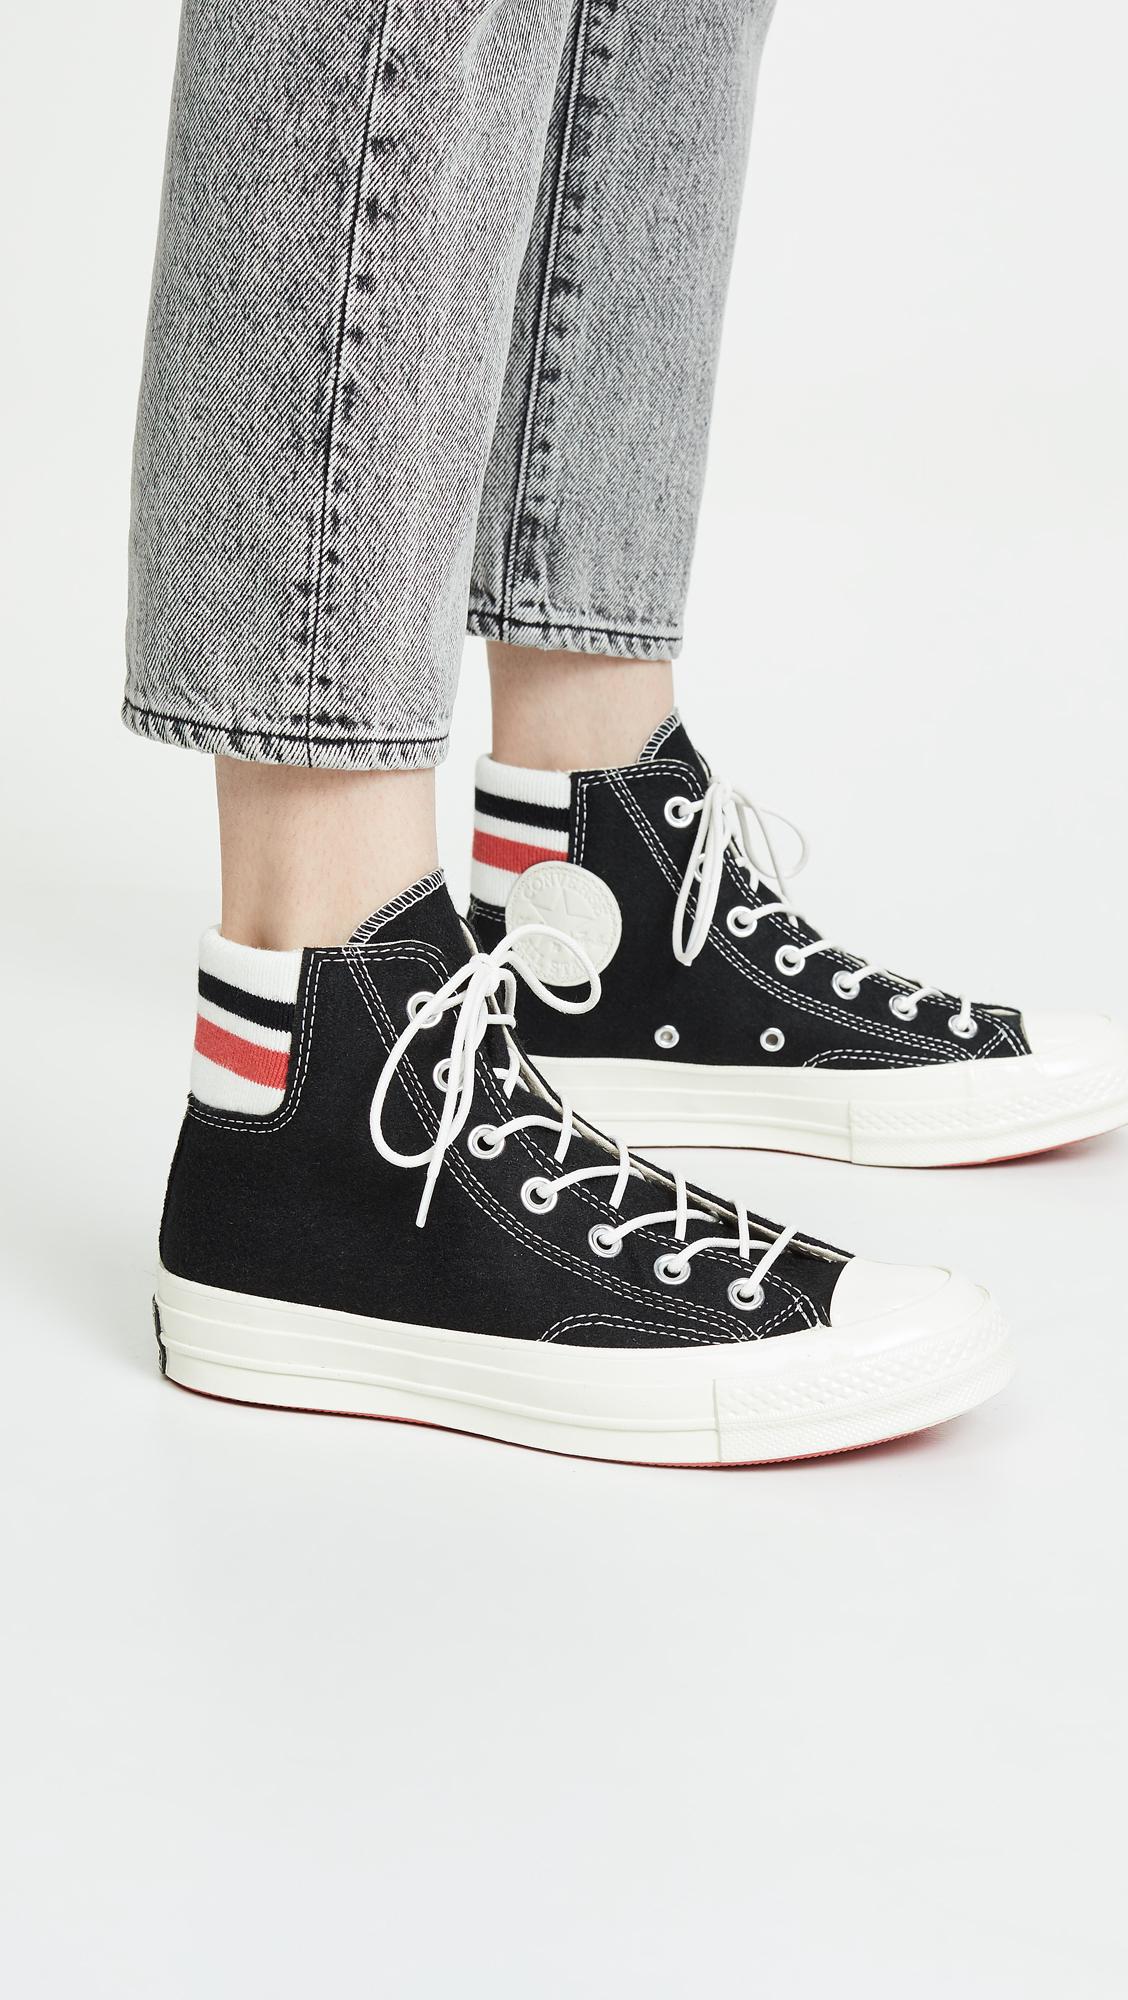 Converse Felt Chuck 70 Retro Stripe High Top Sneakers in Black/Red (Black)  - Lyst